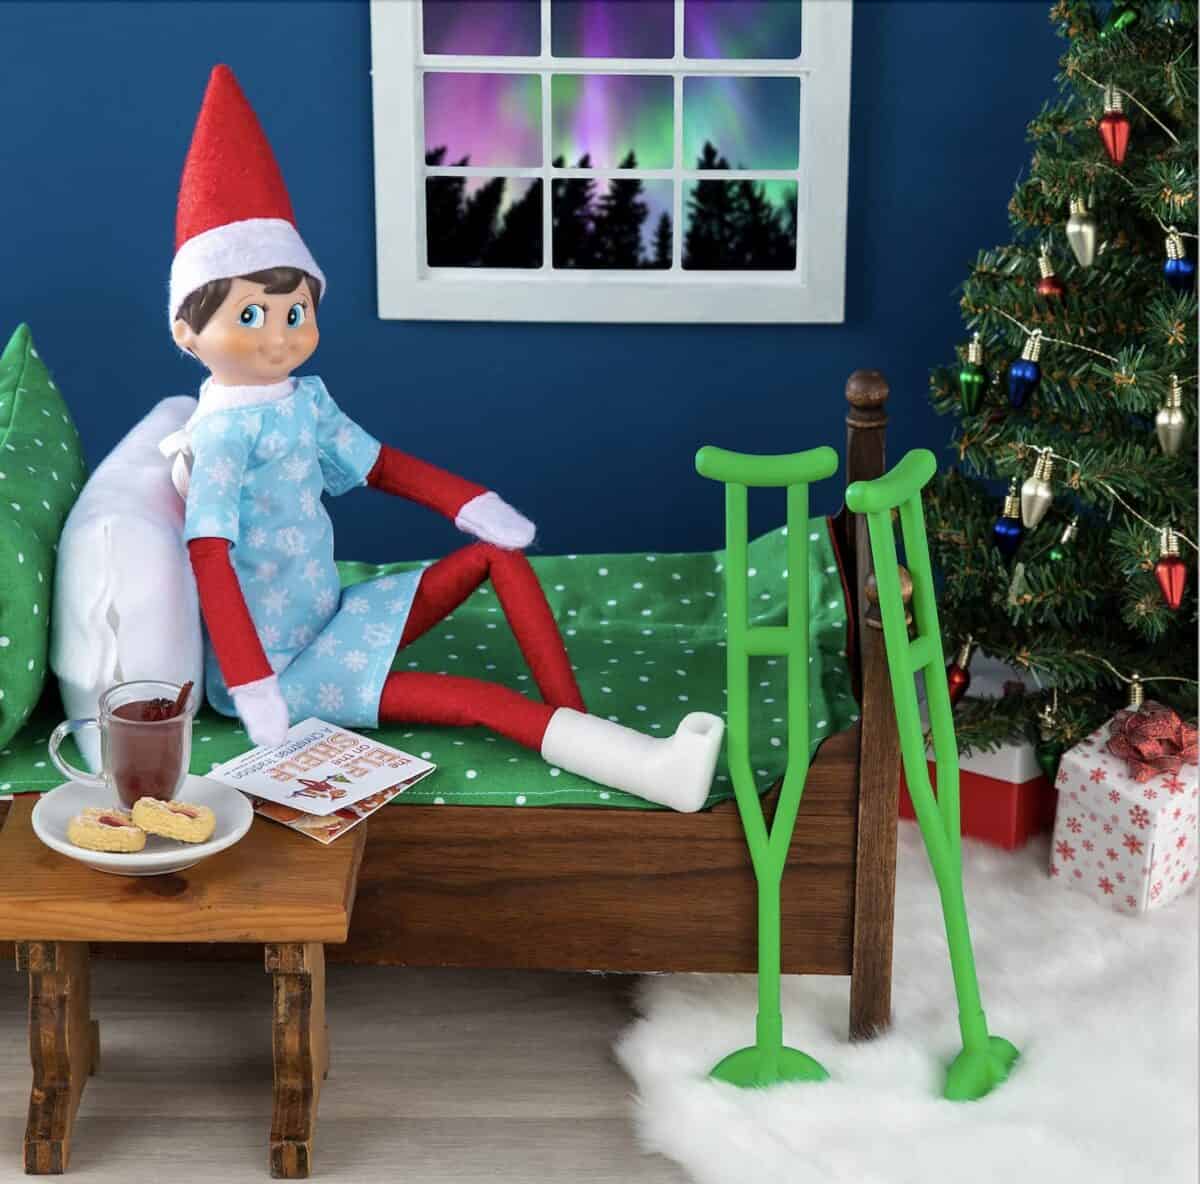 Elf sitting with a broken leg. 